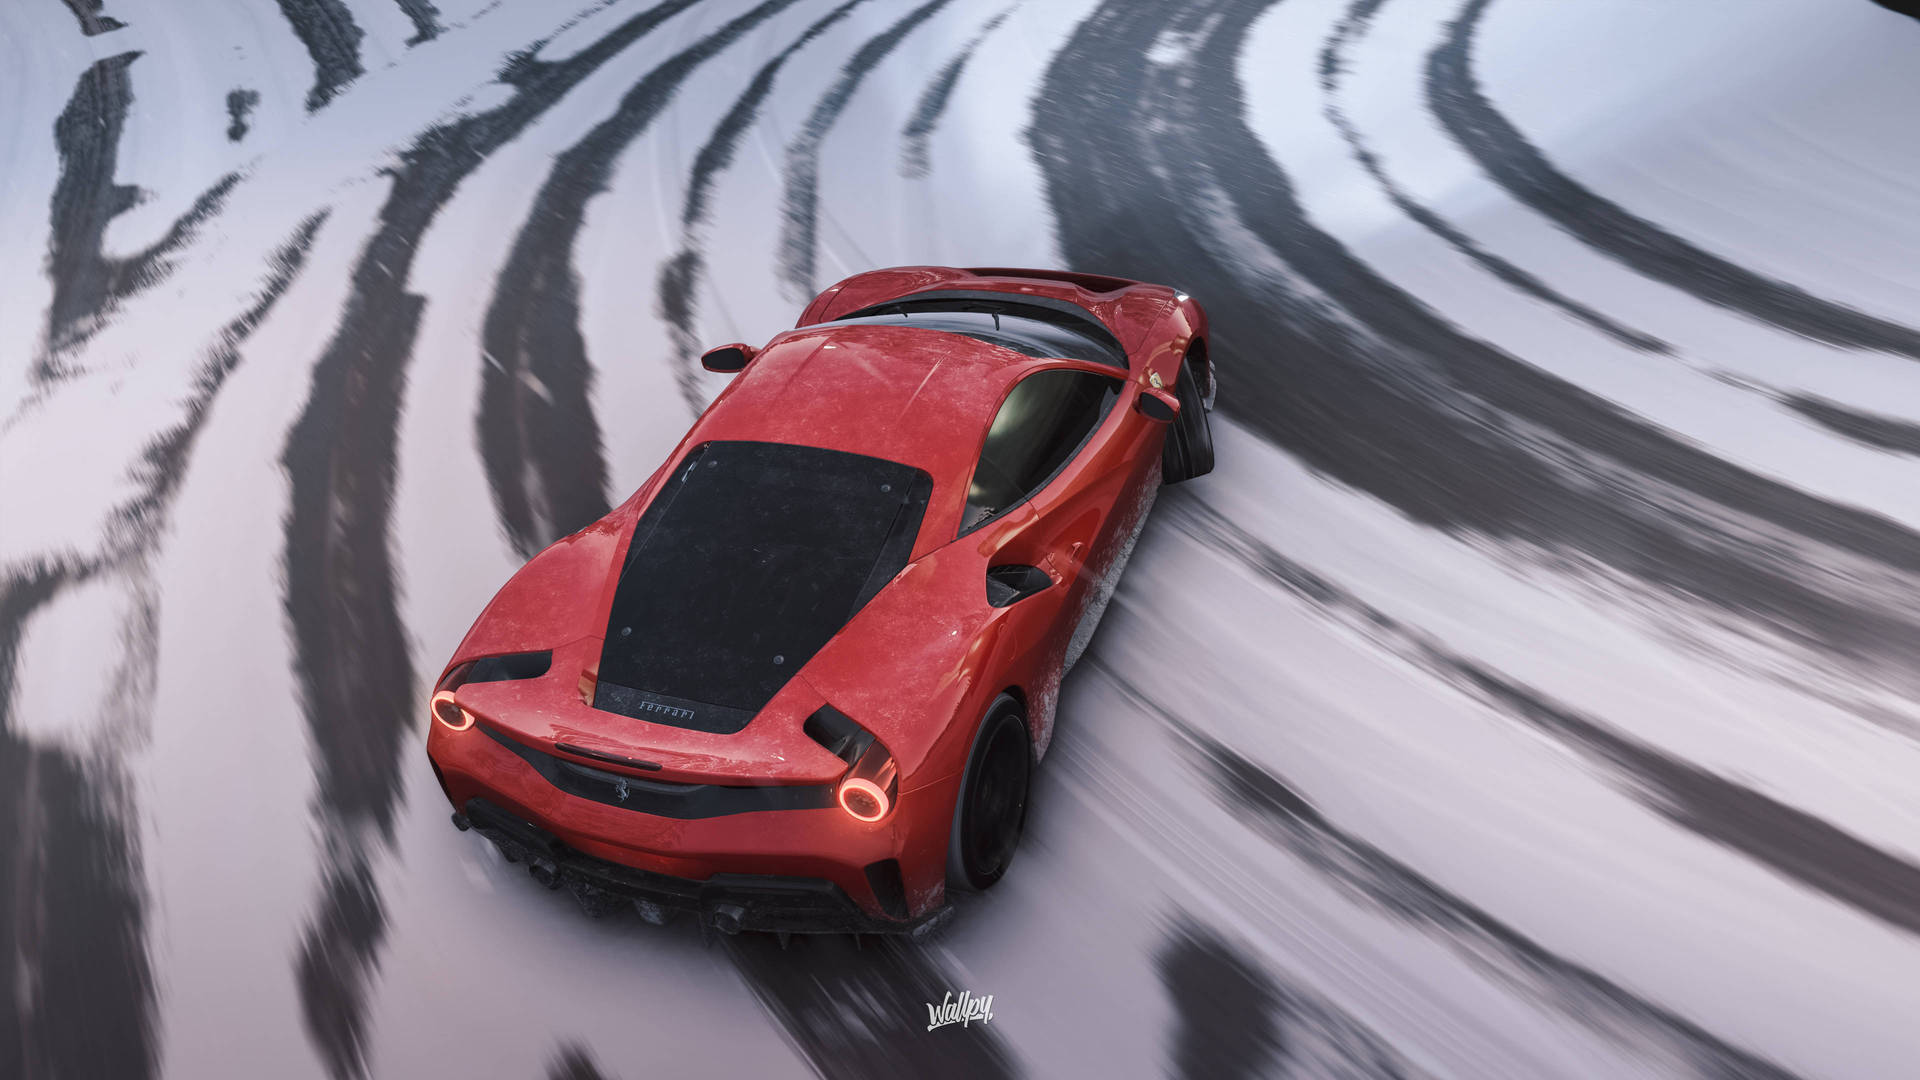 Red Ferrari In Forza 4 Game Wallpaper